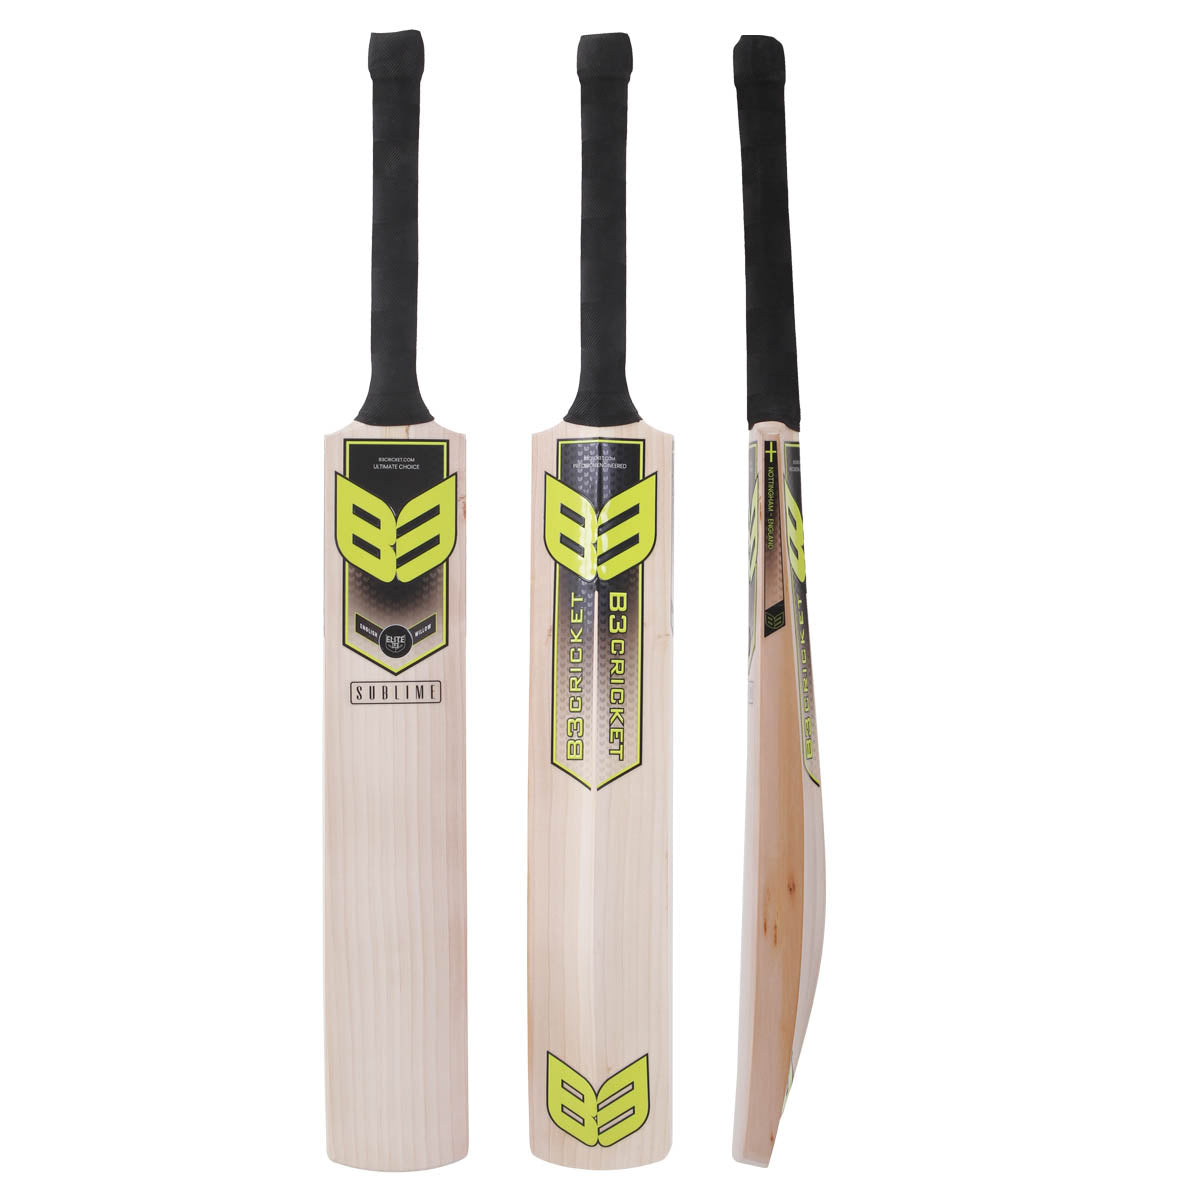 B3 Cricket Sublime Excel (Grade 3) Cricket Bat - The Cricket Store